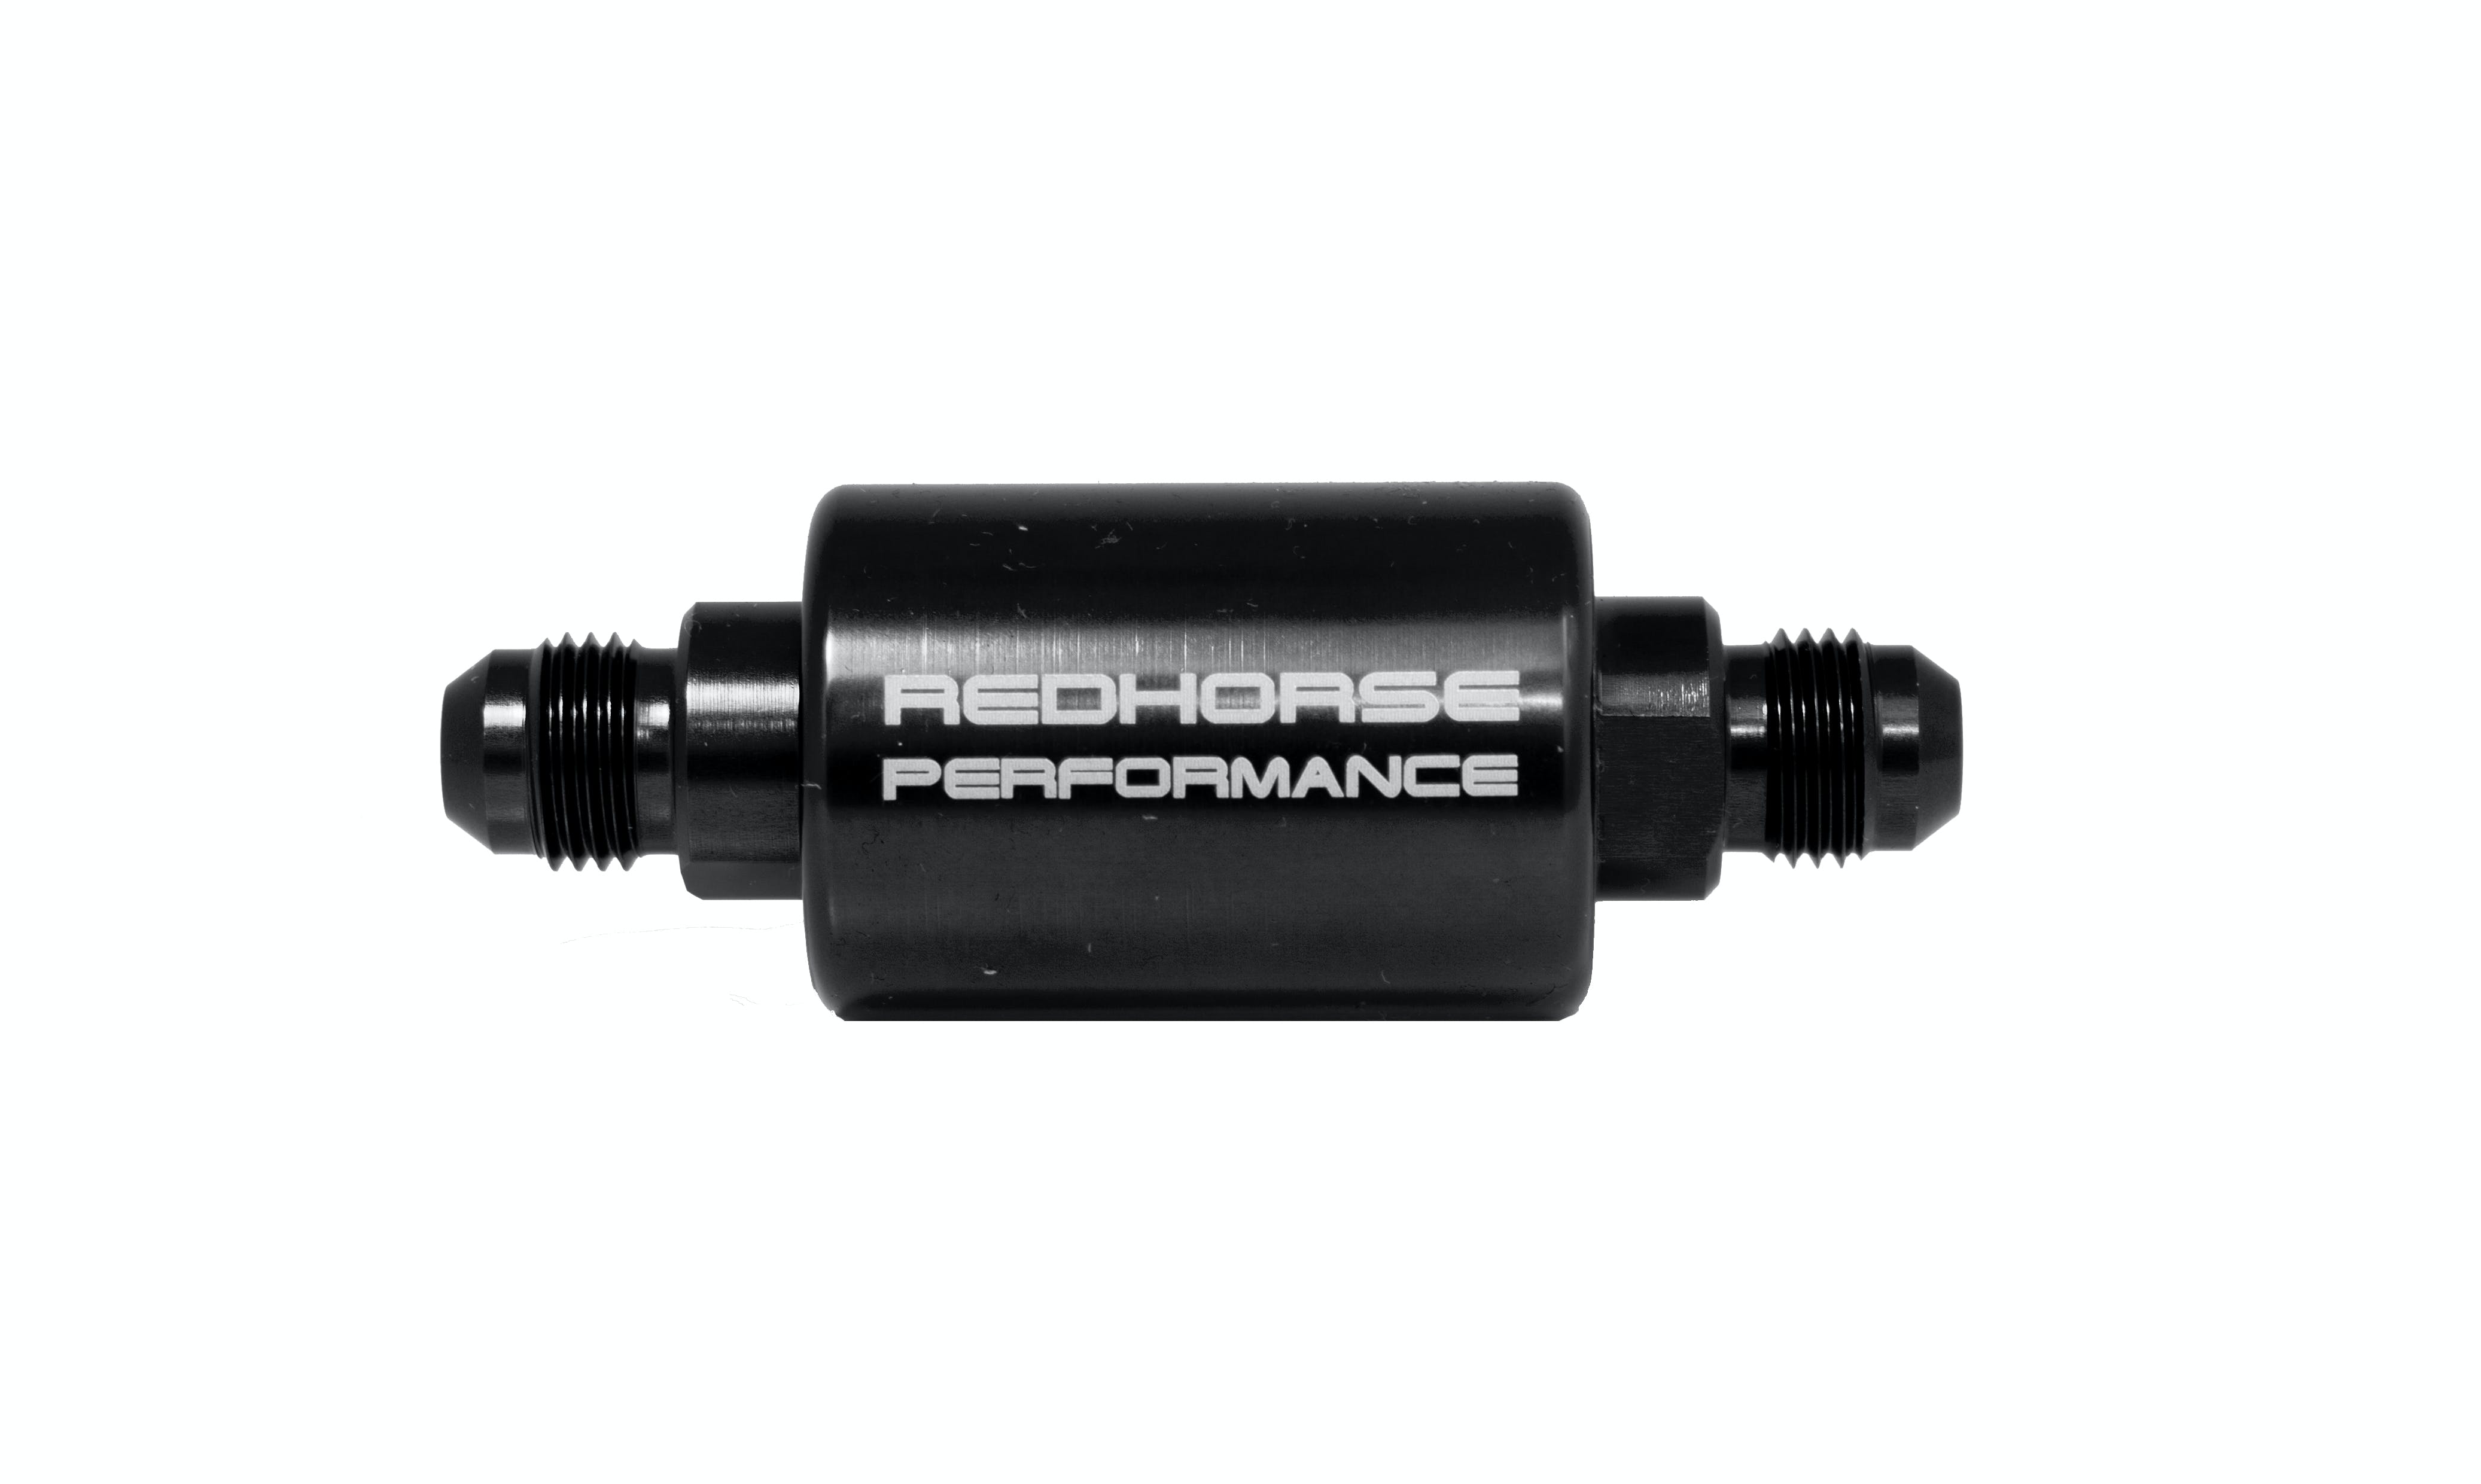 Redhorse Performance 4151-08-2 -08 inlet -08 outlet AN high flow fuel filter - black